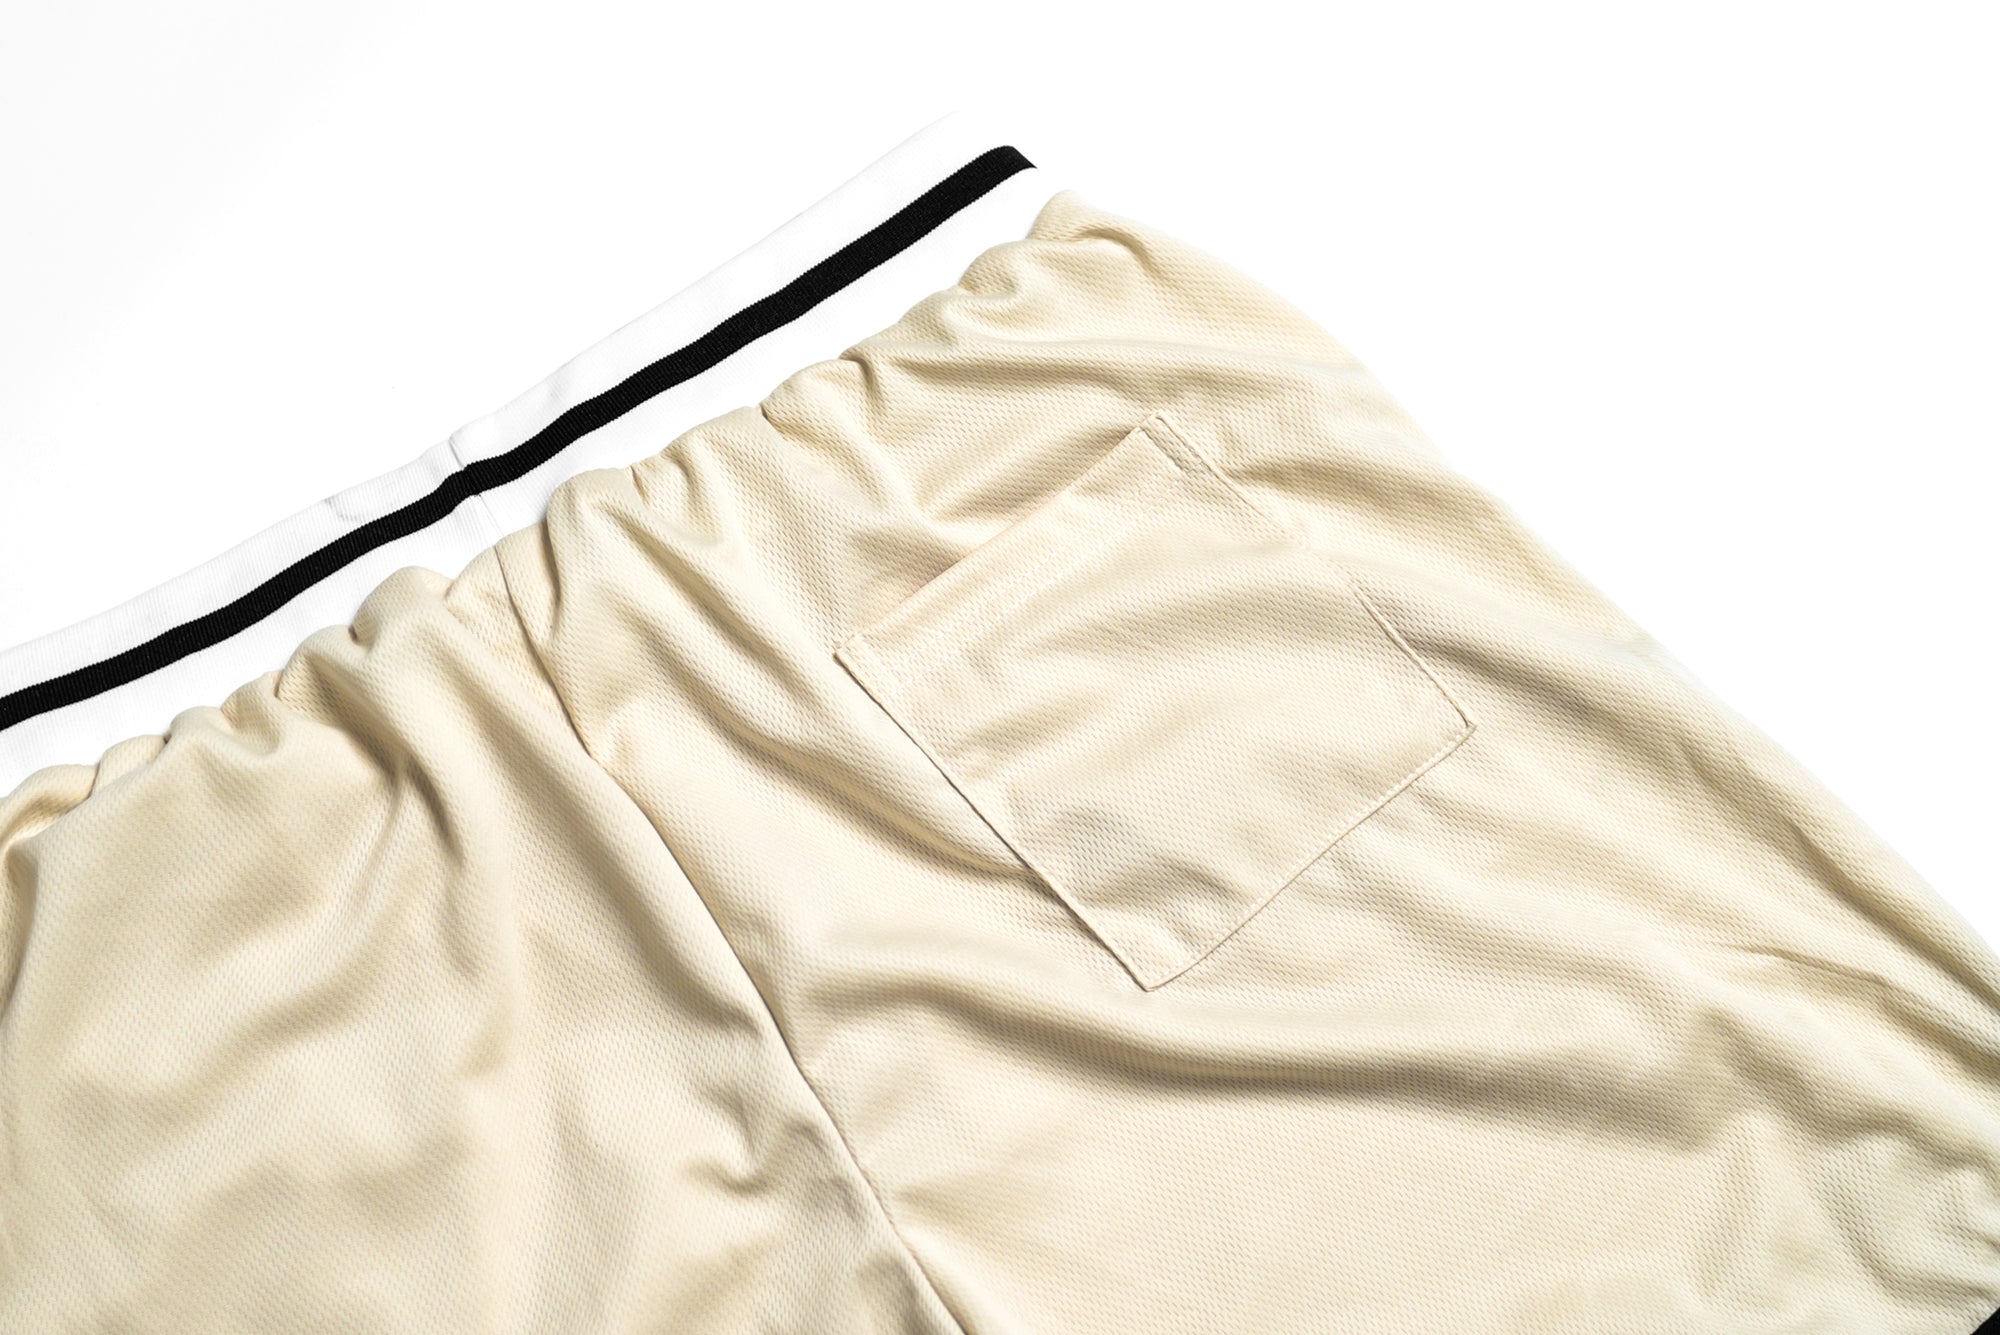 Retro Court Side Shorts - Black - Live Fit. Apparel